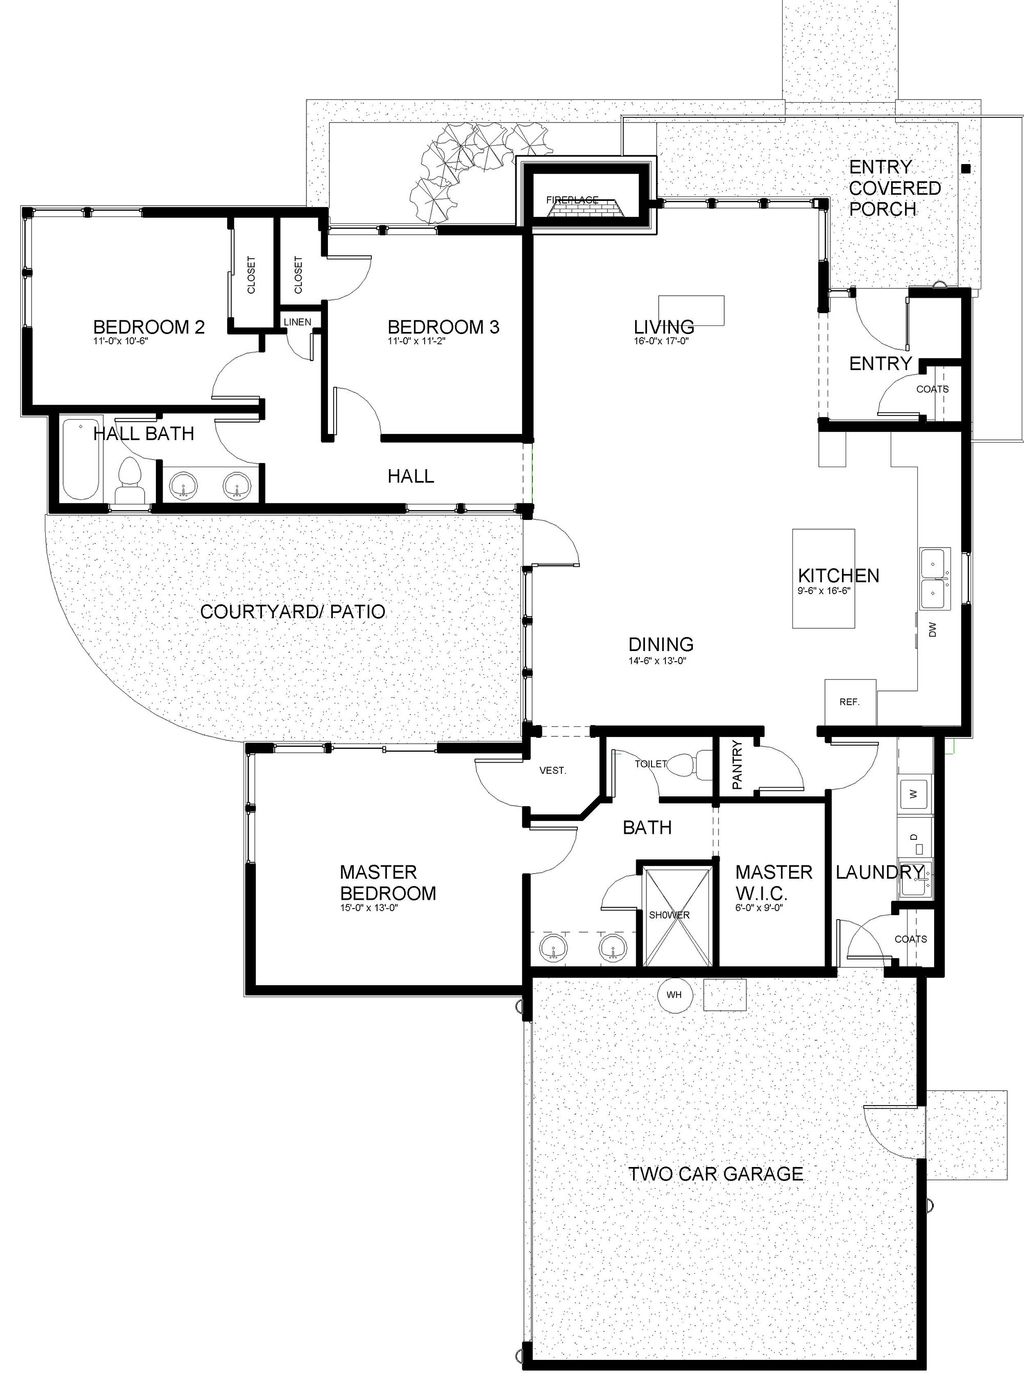 Modern Style House Plan 3 Beds 2 Baths 1731 Sq Ft Plan 5 60 Floorplans Com